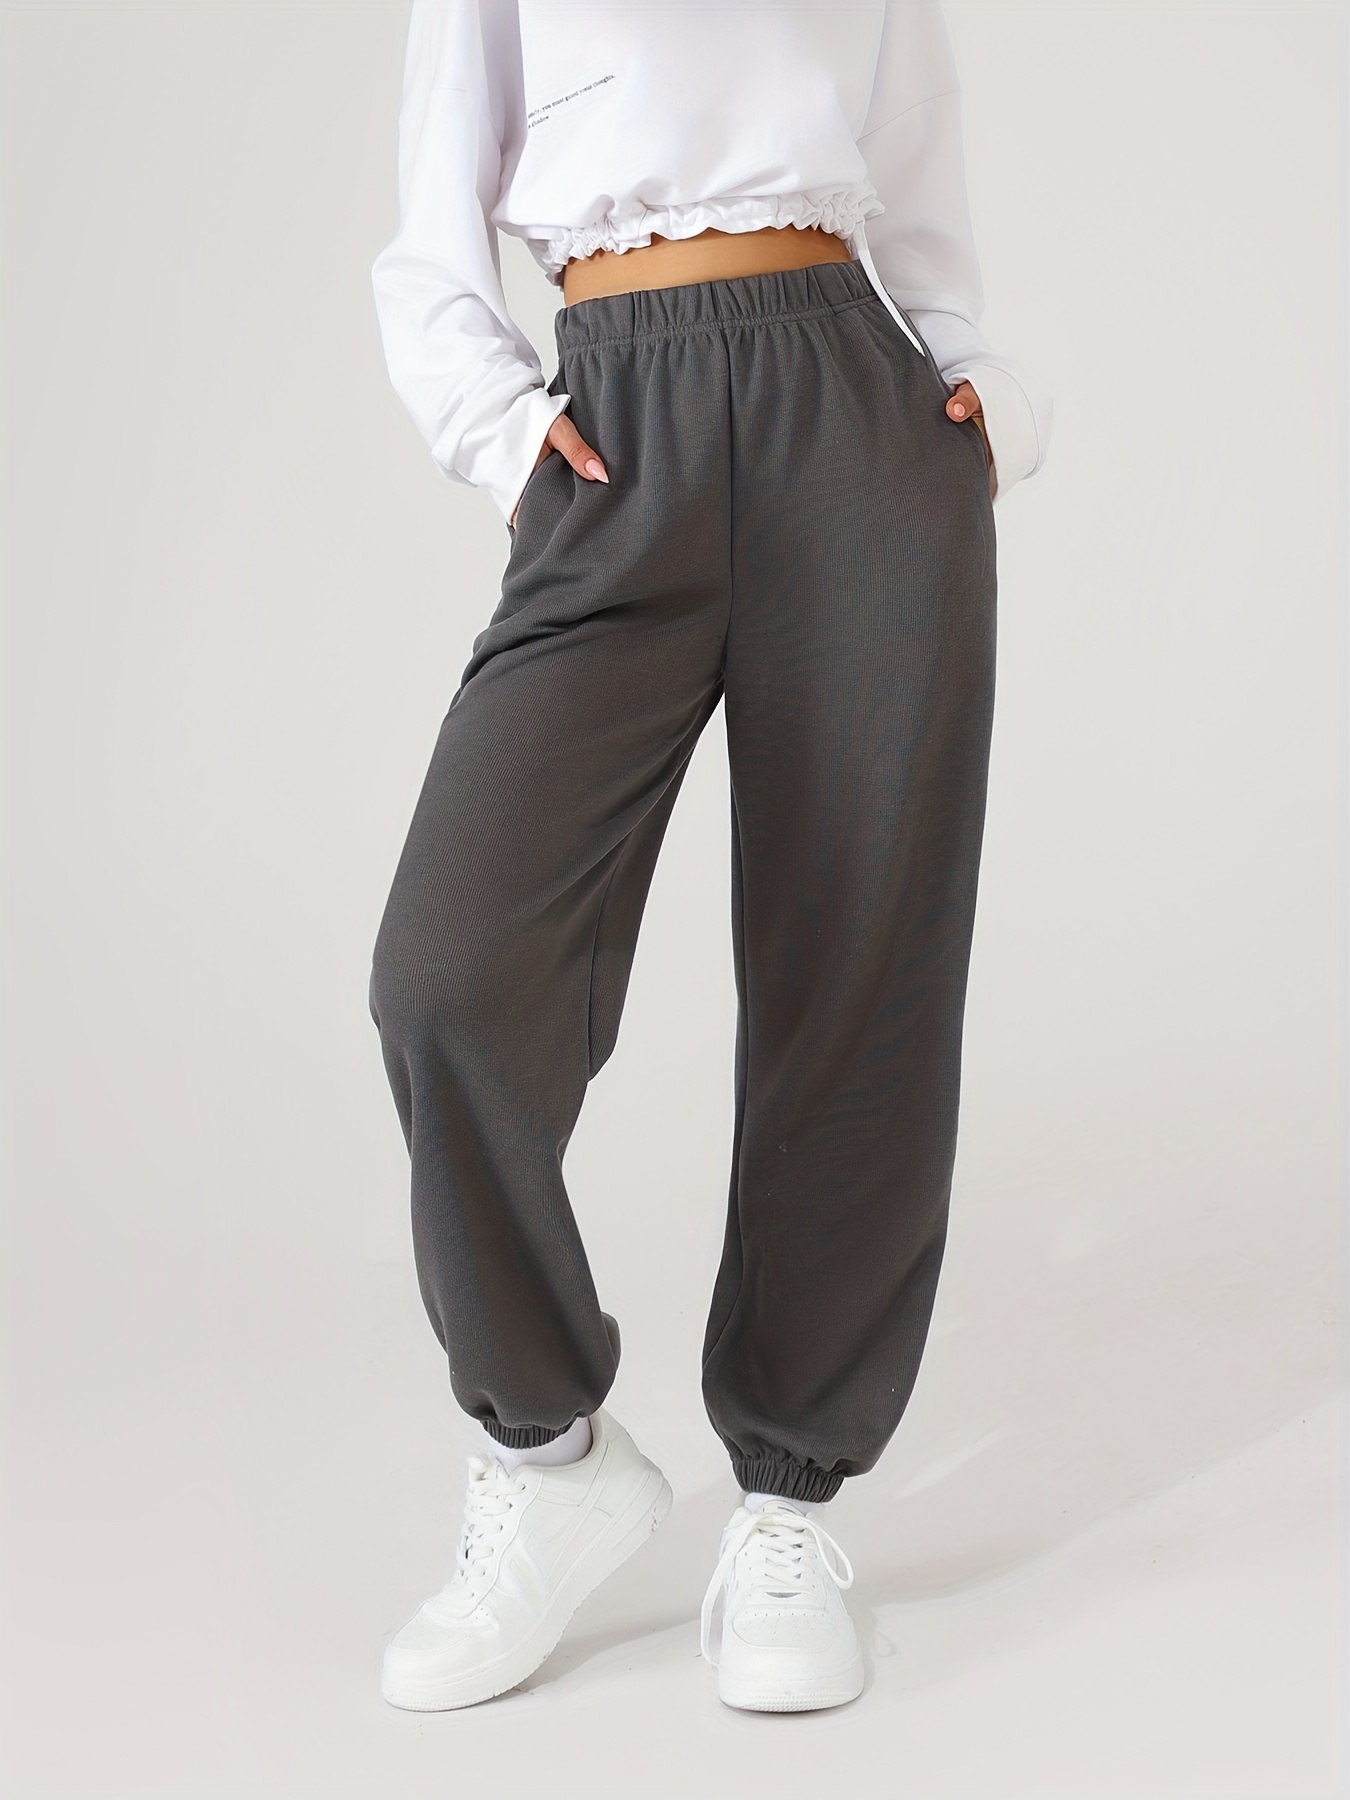 JWZUY Womens Plain Pants Casual Jogger Sweatpants Ankle Length Drawstrijg  Elastic Waist Pant Workout Fitness Pants Black XL